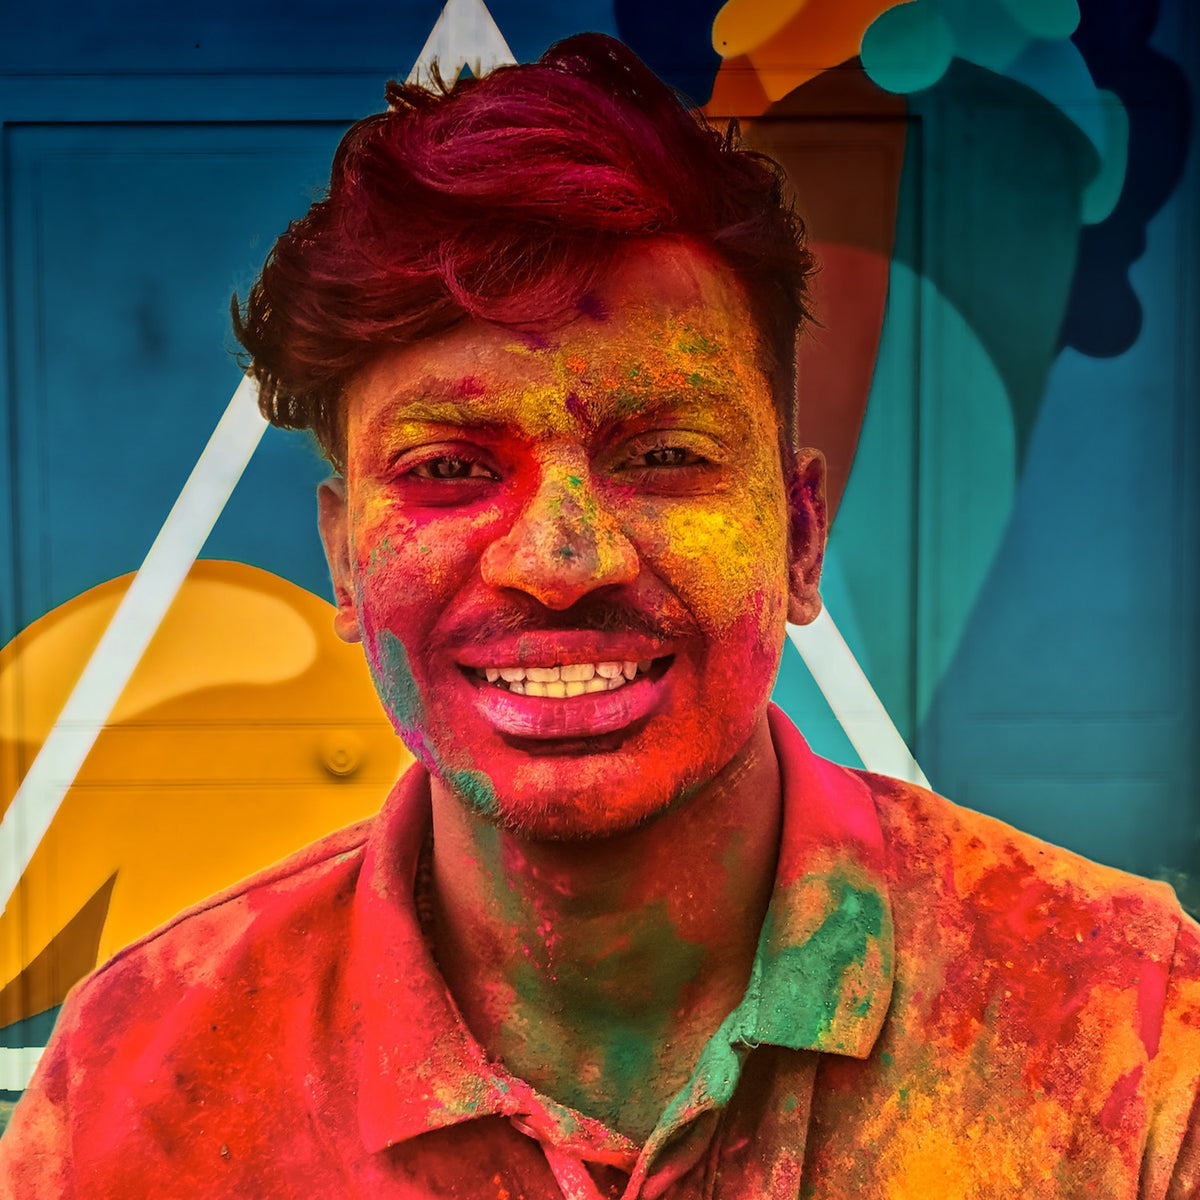 Celebrating Holi - The Festival of Colour